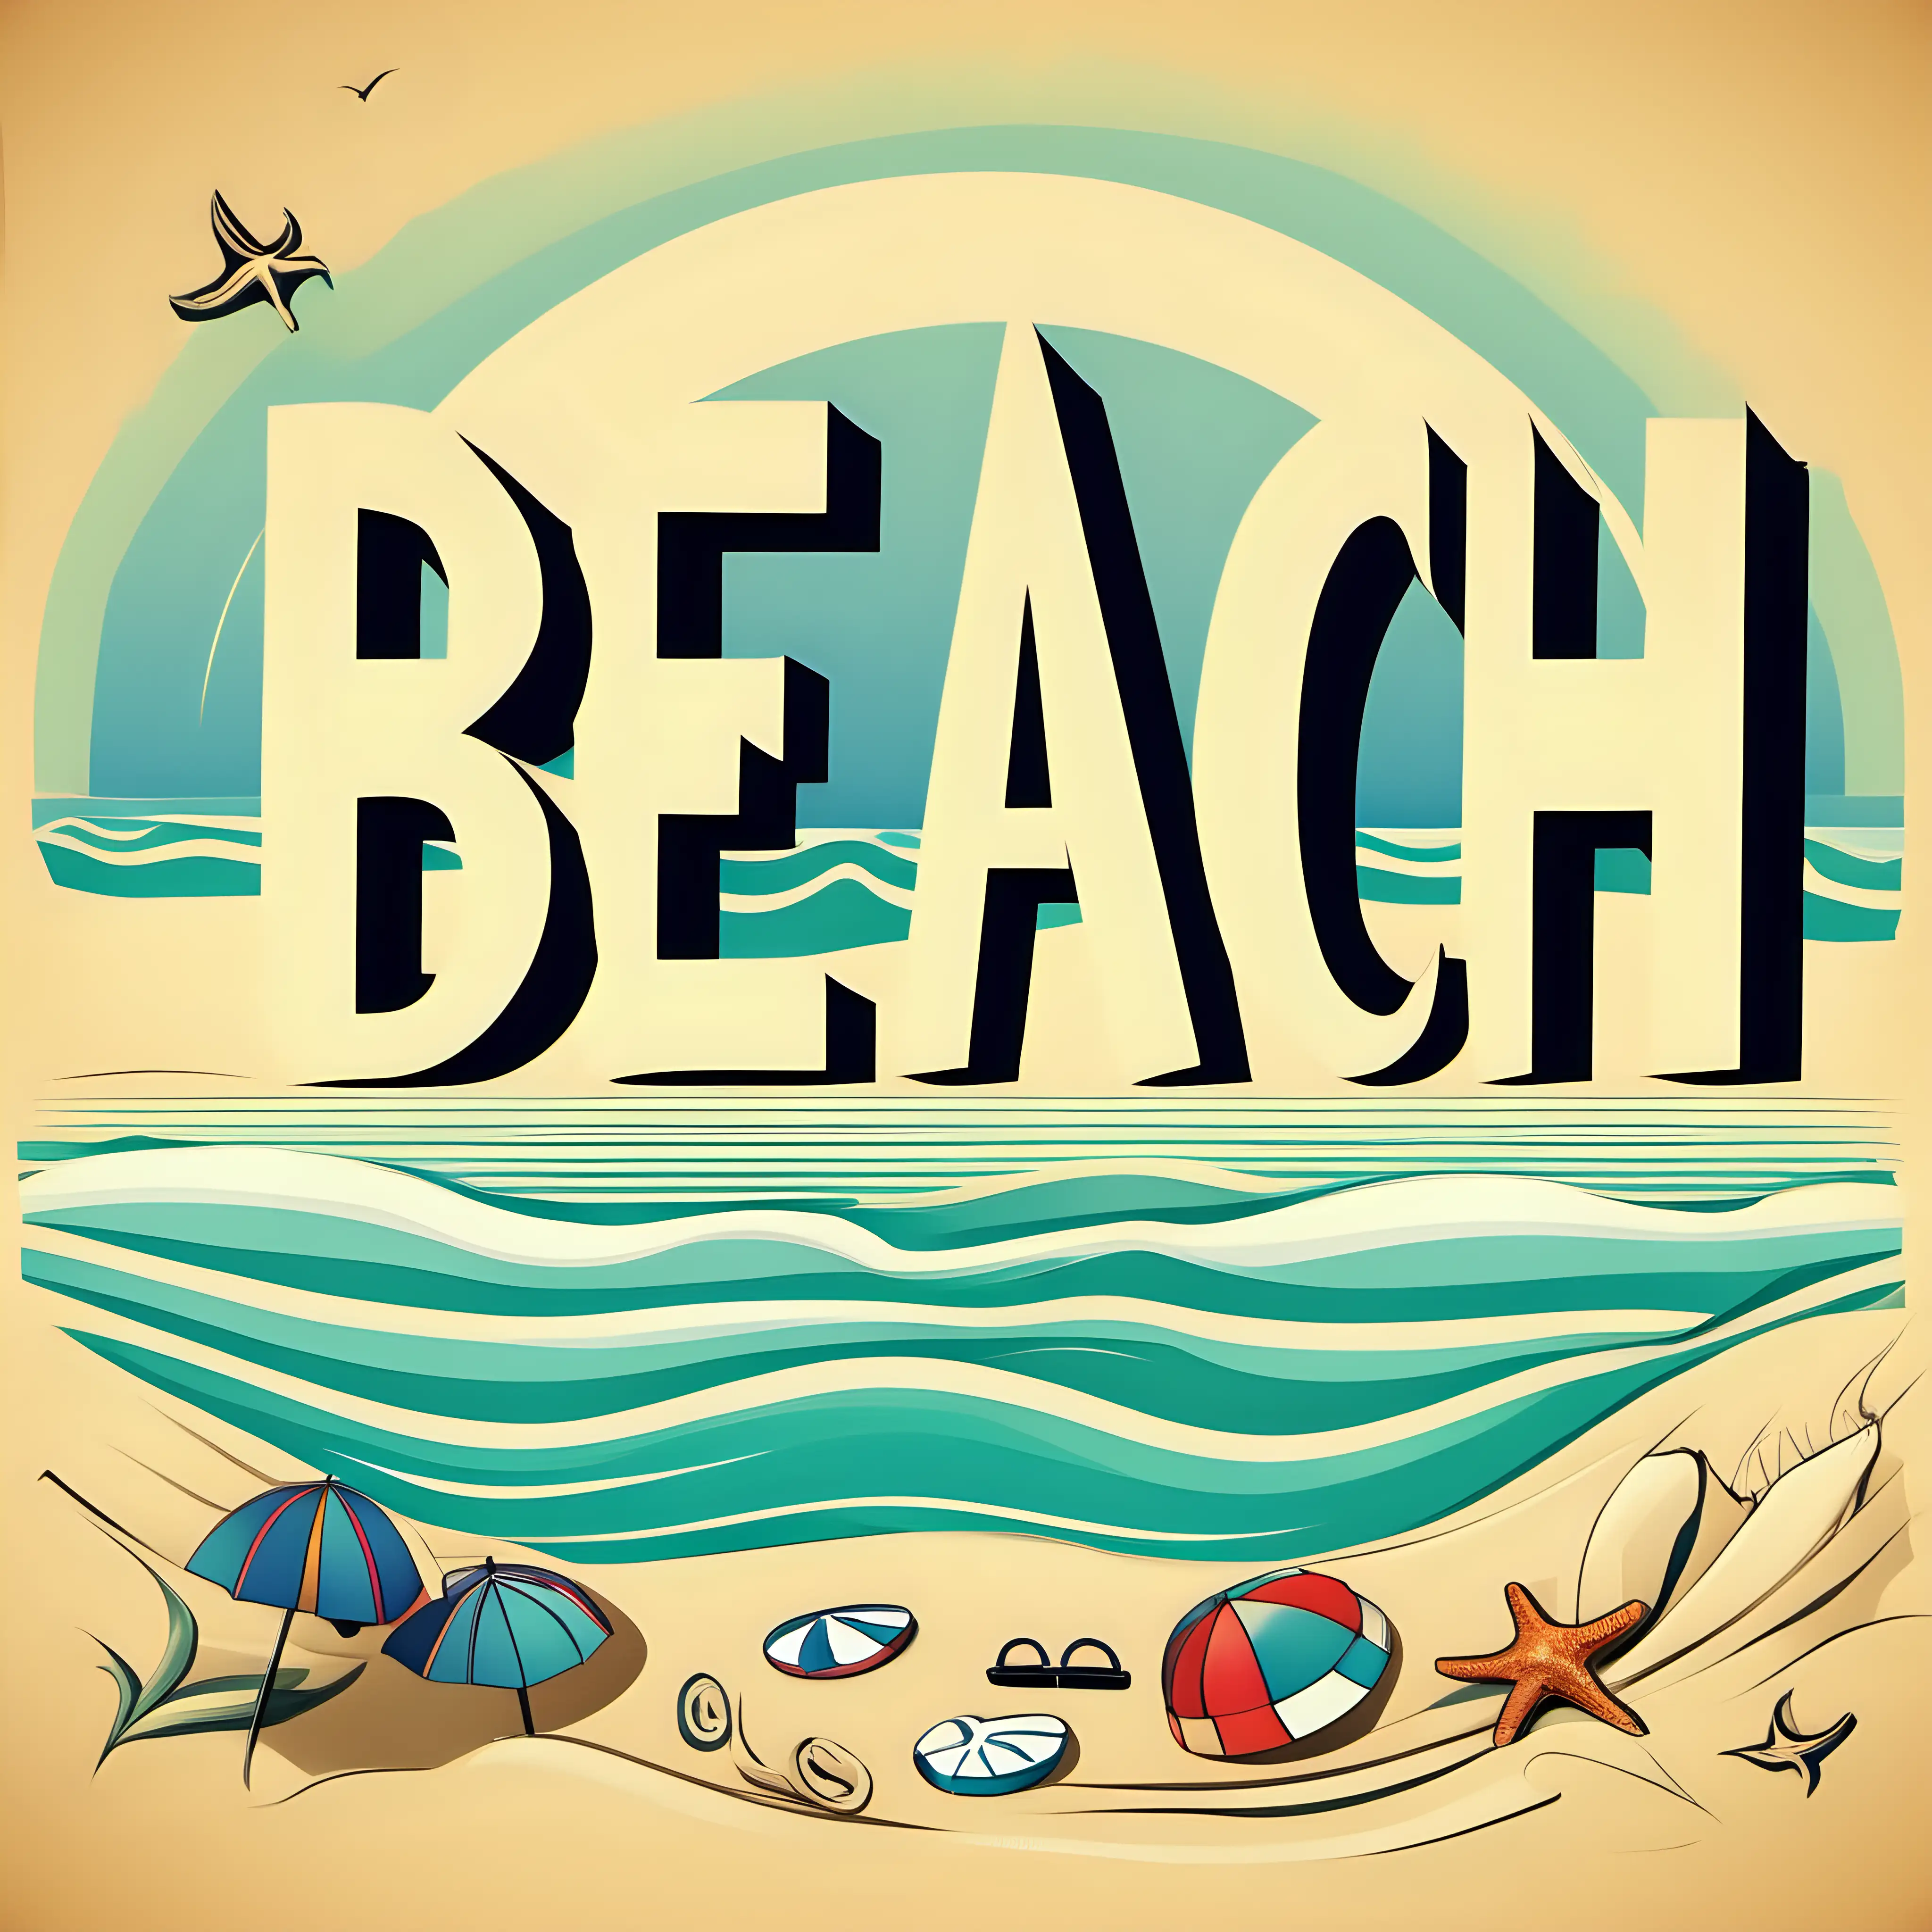 Serene Beach Typography Artwork with Zen Style Font